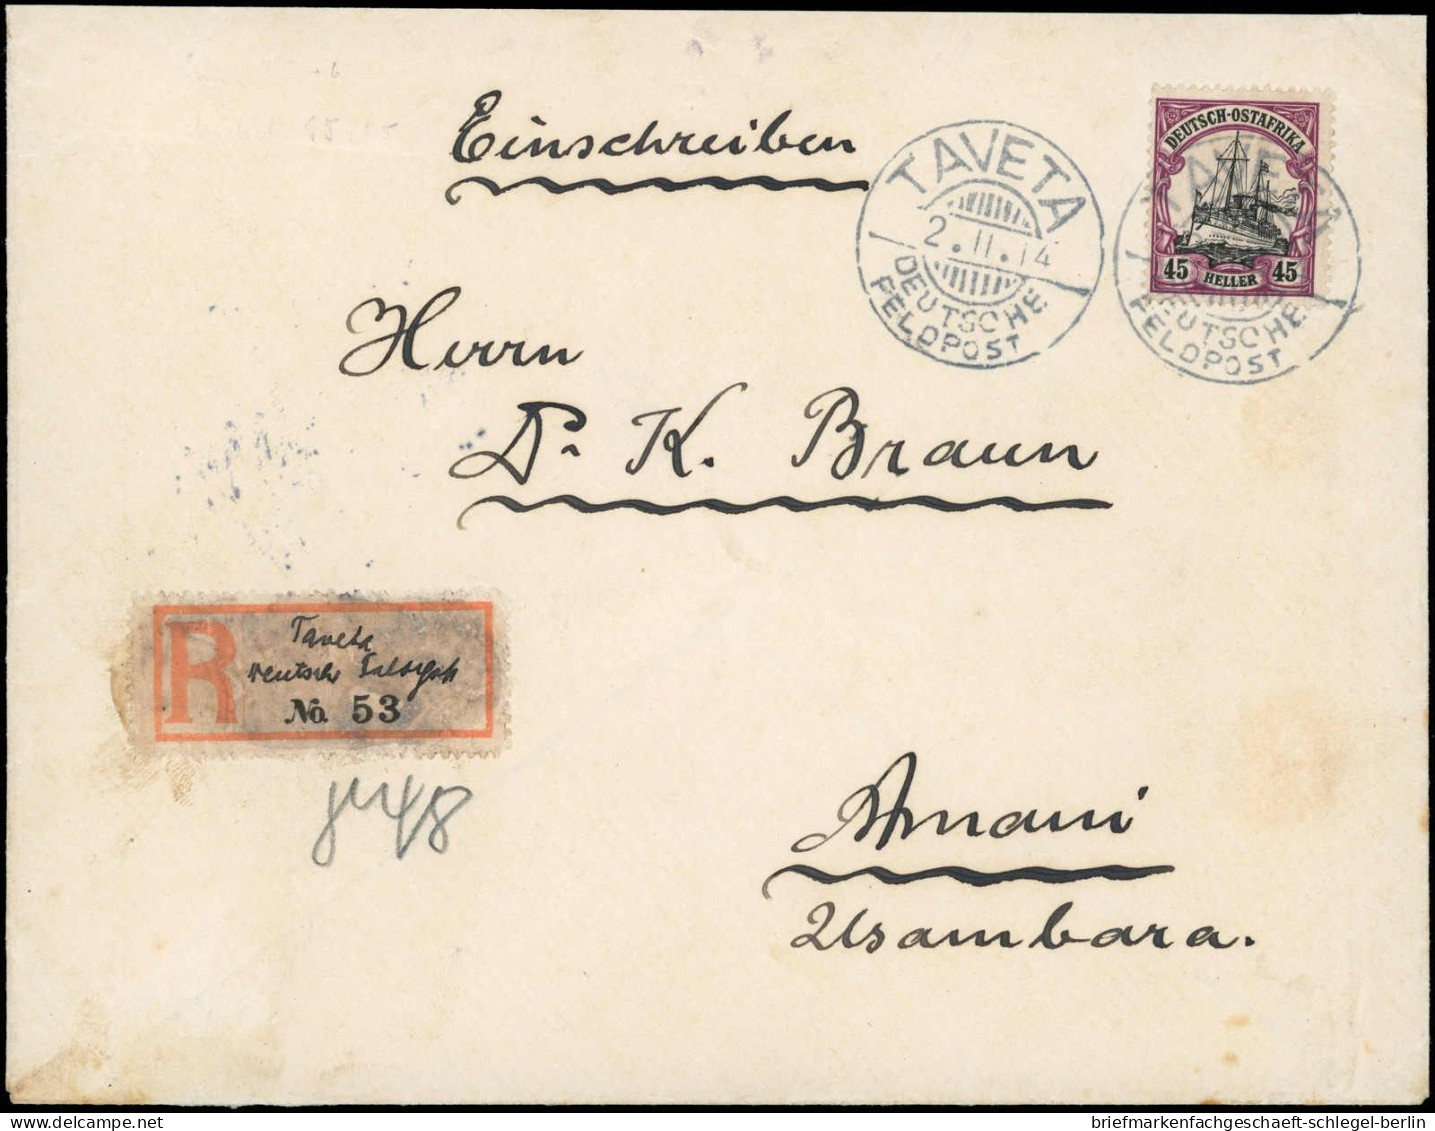 Deutsche Kolonien Ostafrika, Brief - Duits-Oost-Afrika